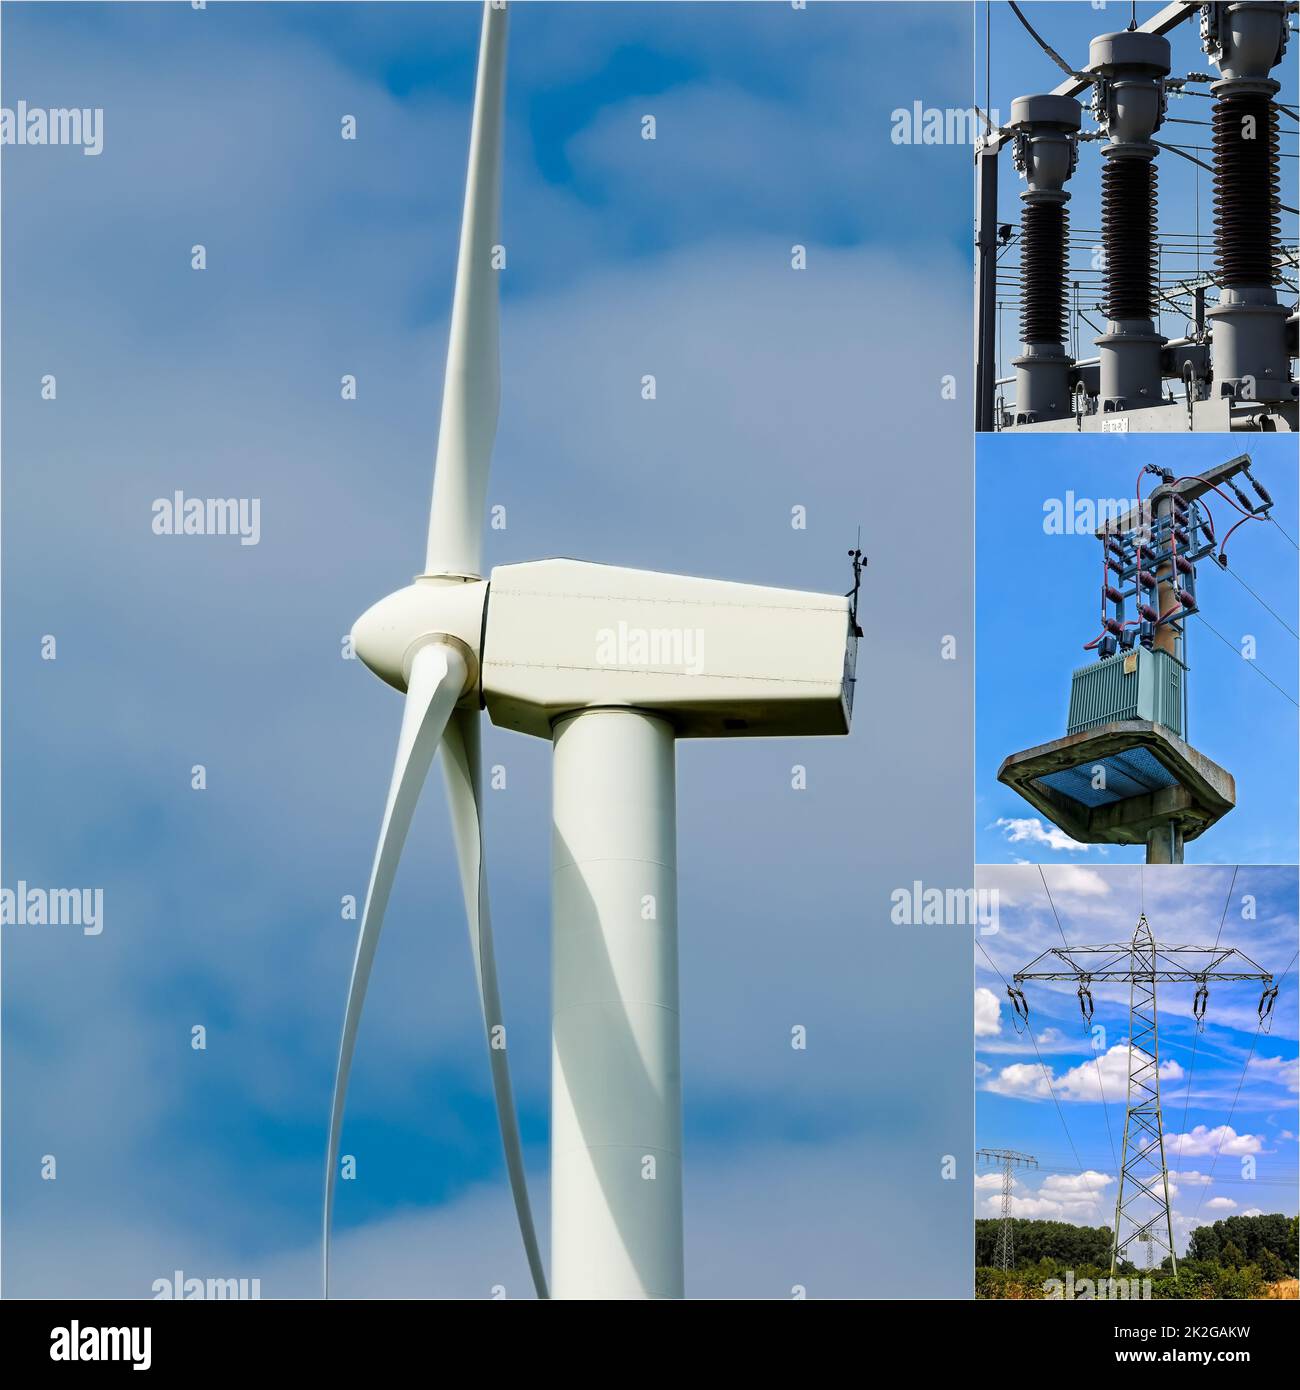 Wind turbine, wind turbine in the wind farm, energy generation and power supply through renewable energy, wind energy Stock Photo